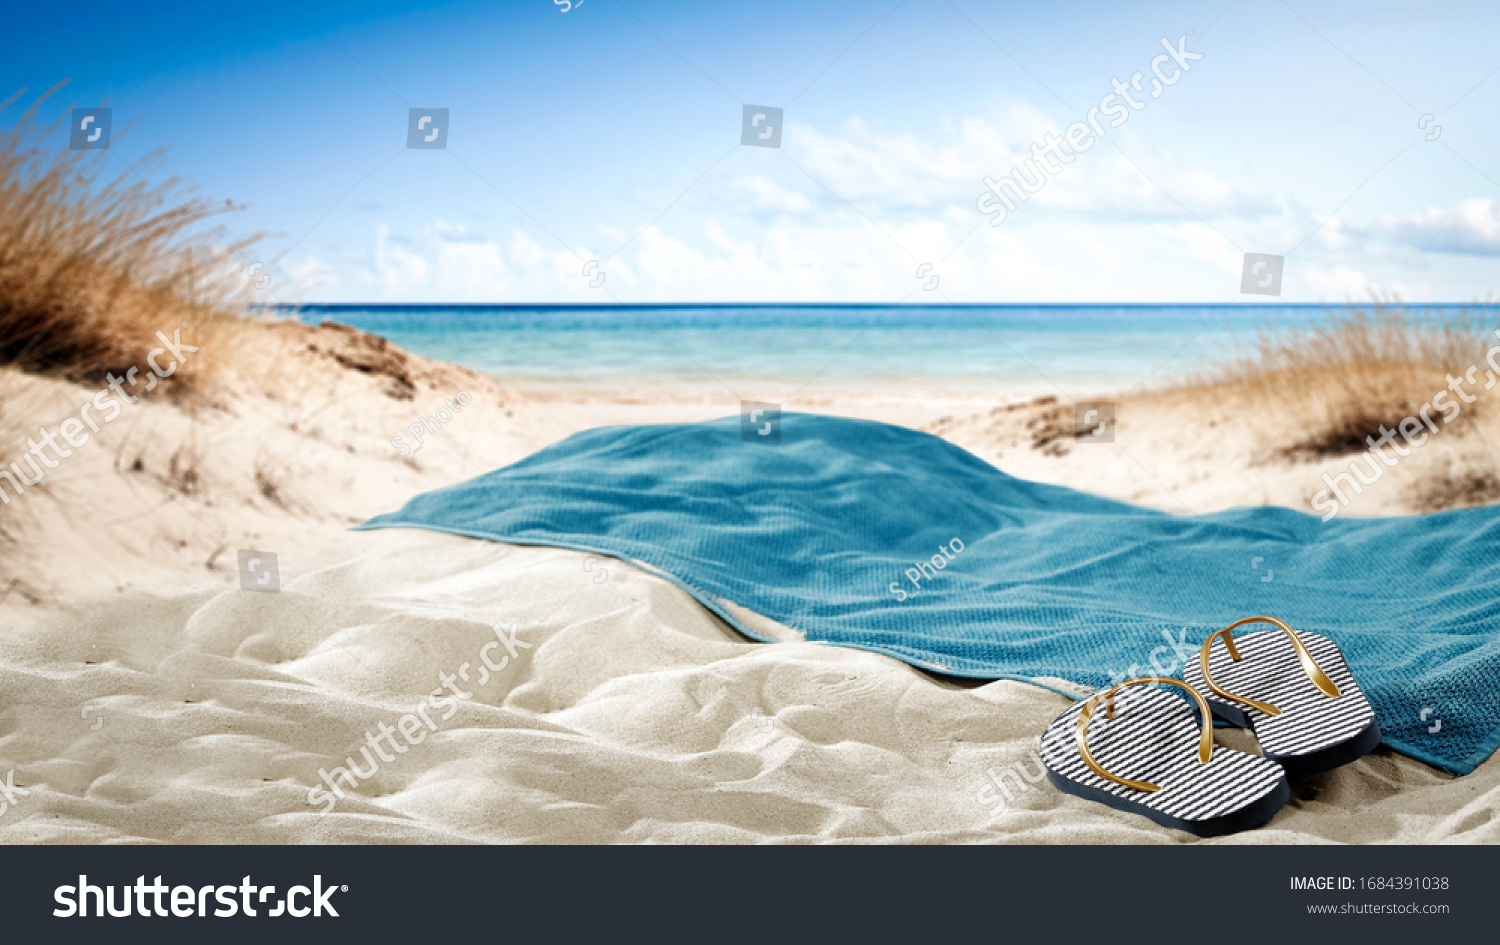 41,974 Beach towel on sand Images, Stock Photos & Vectors | Shutterstock